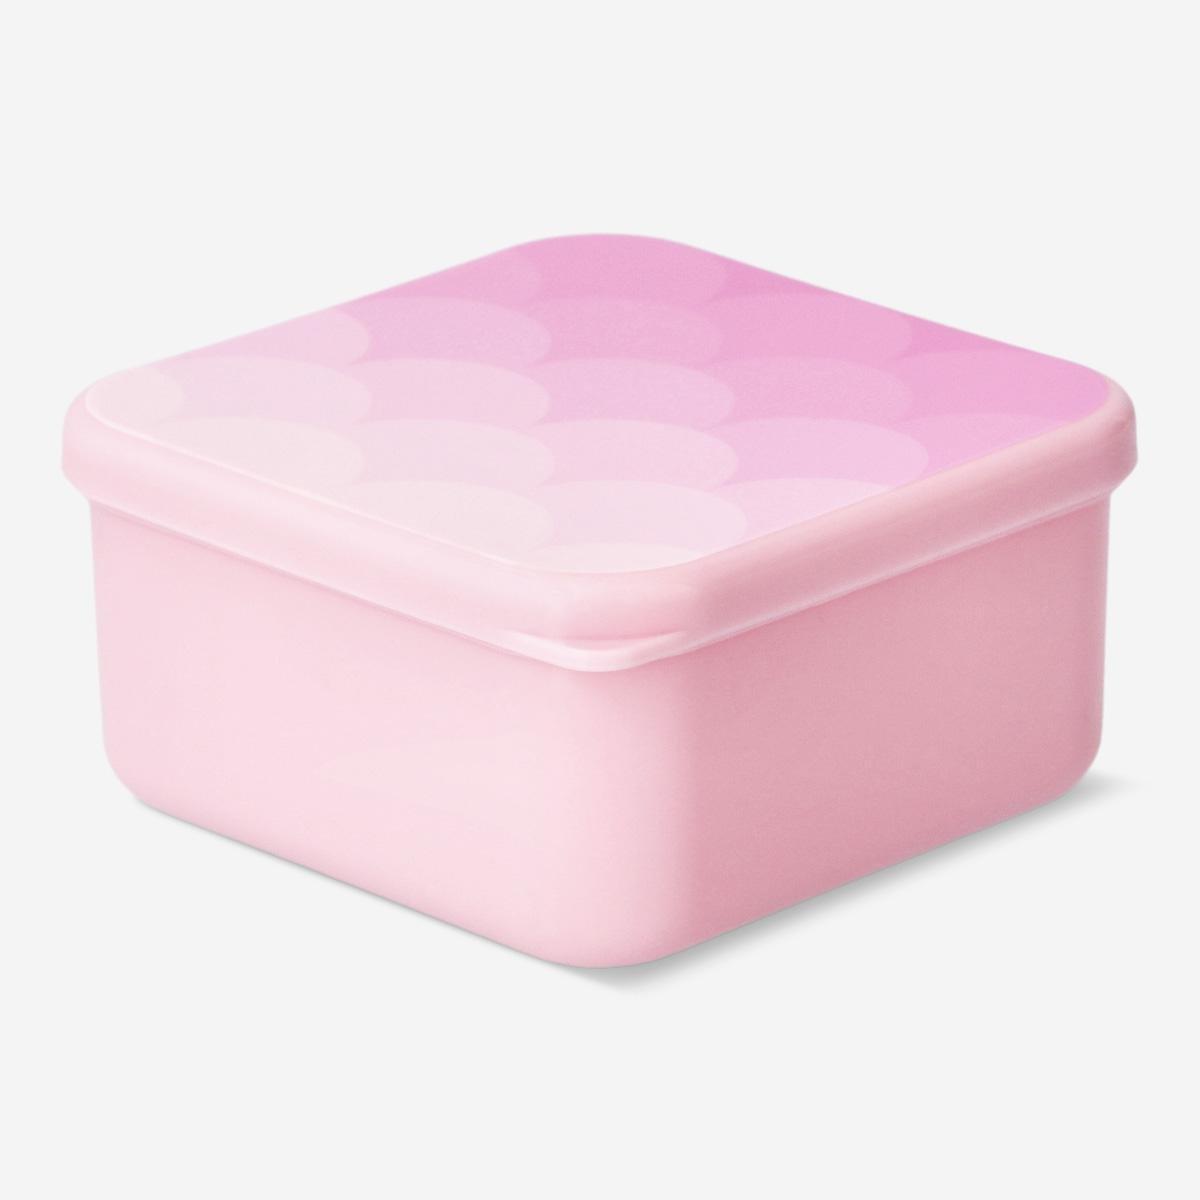 Pink snack box